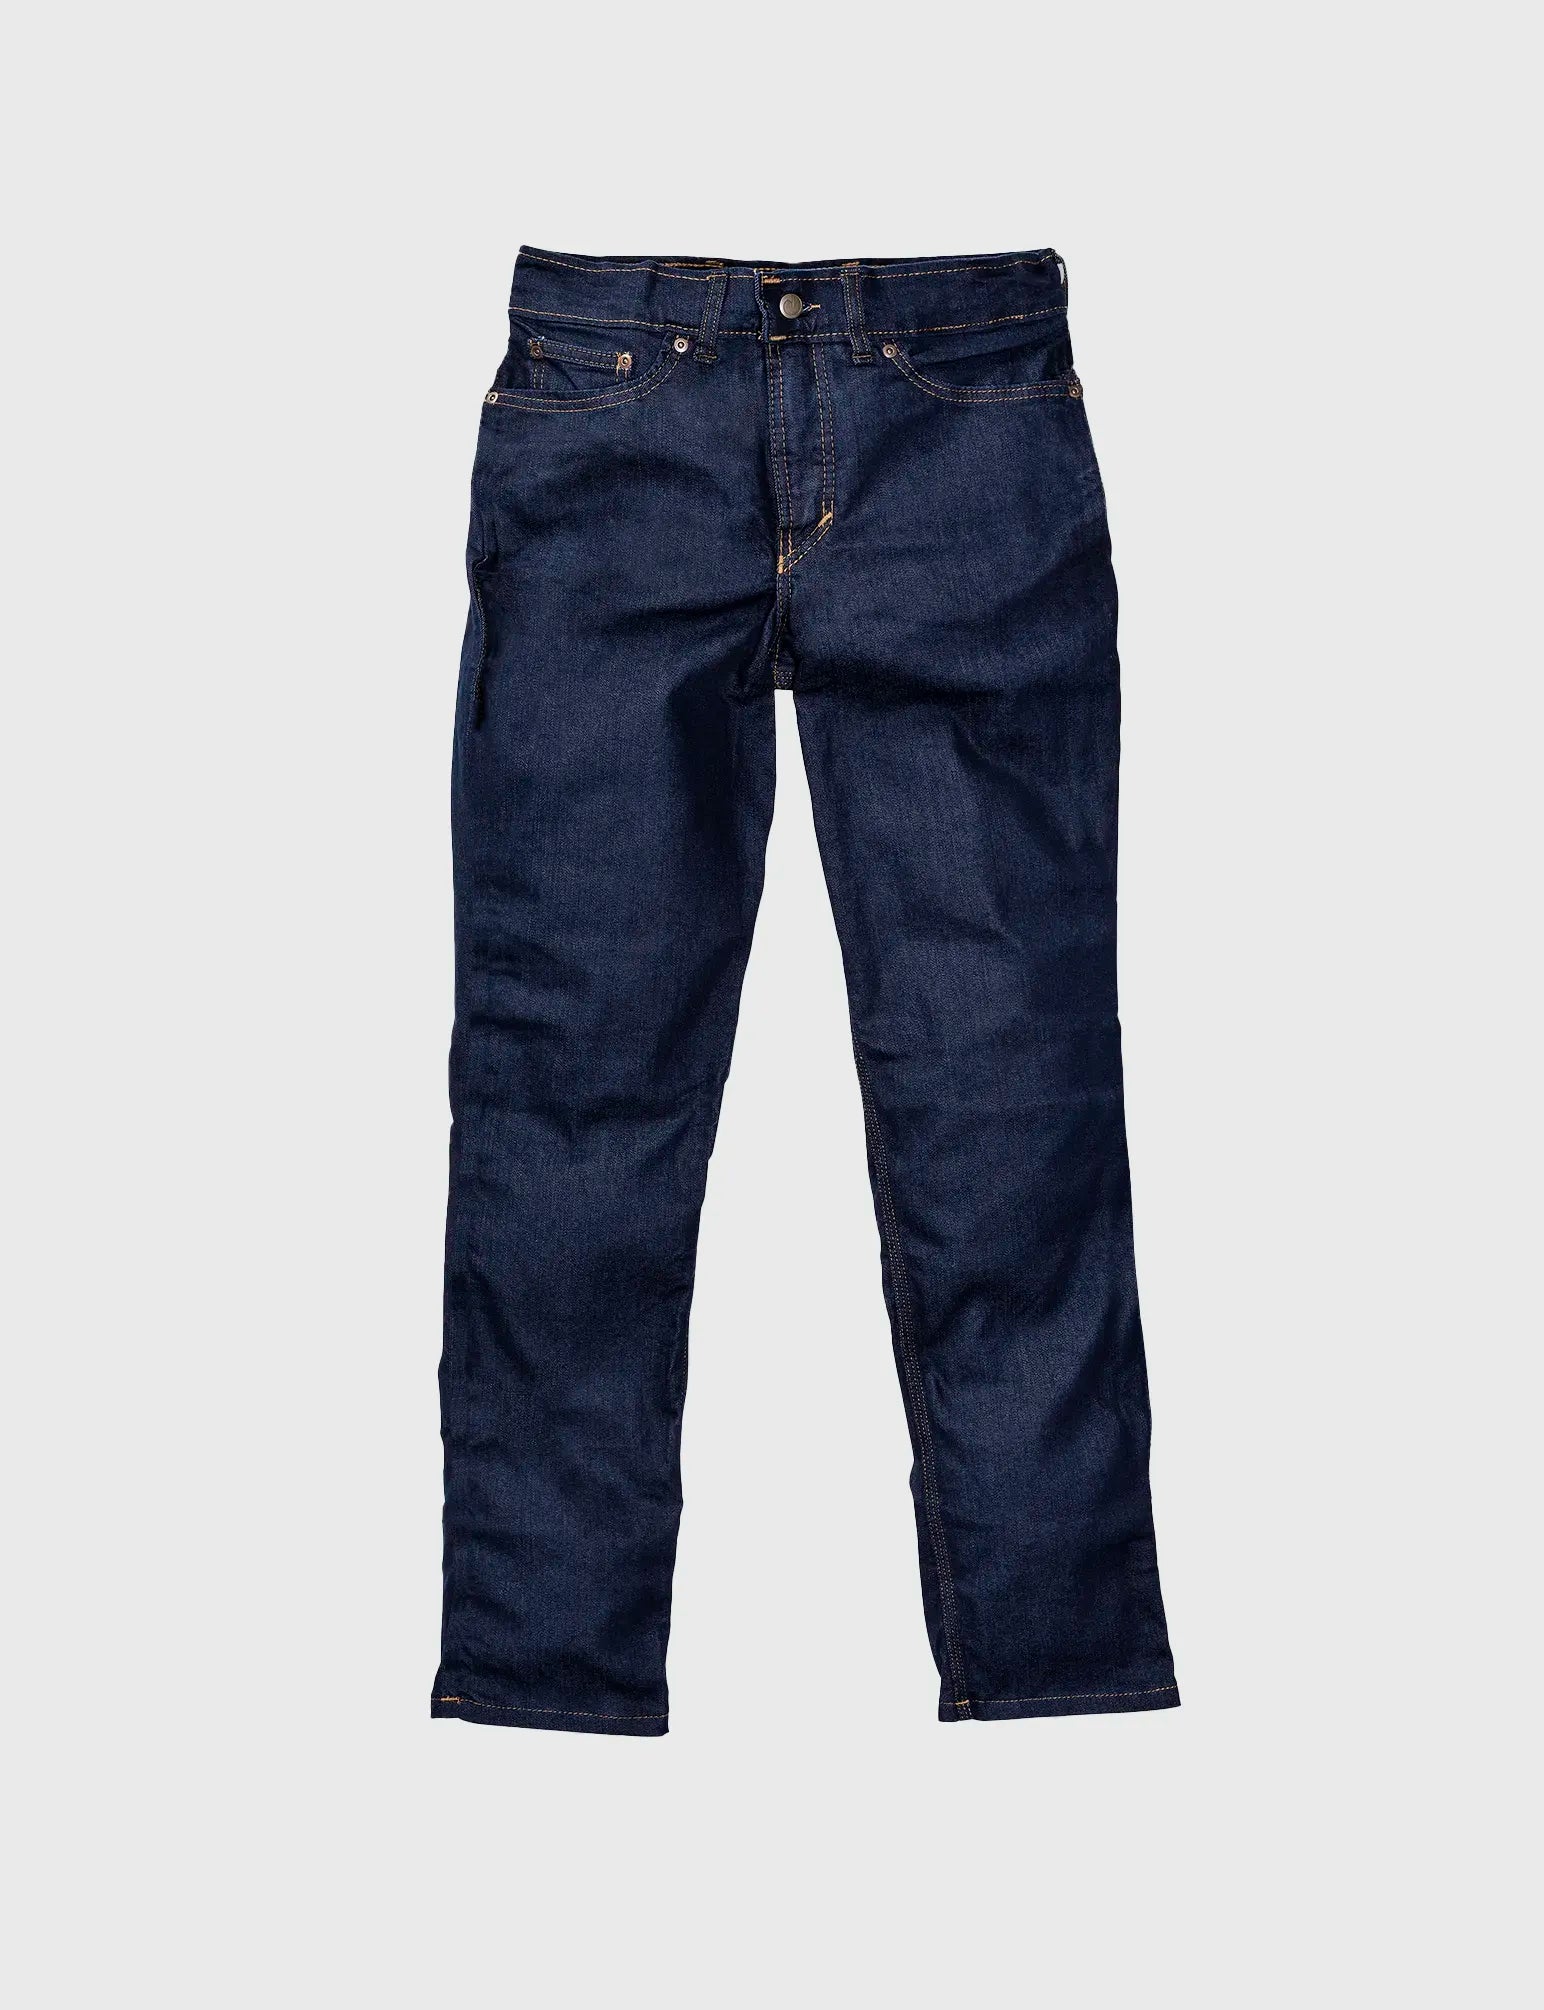 Premium Photo | Blue denim jeans stacked on shelf in store shopping center  sale casual attire denim in showroom